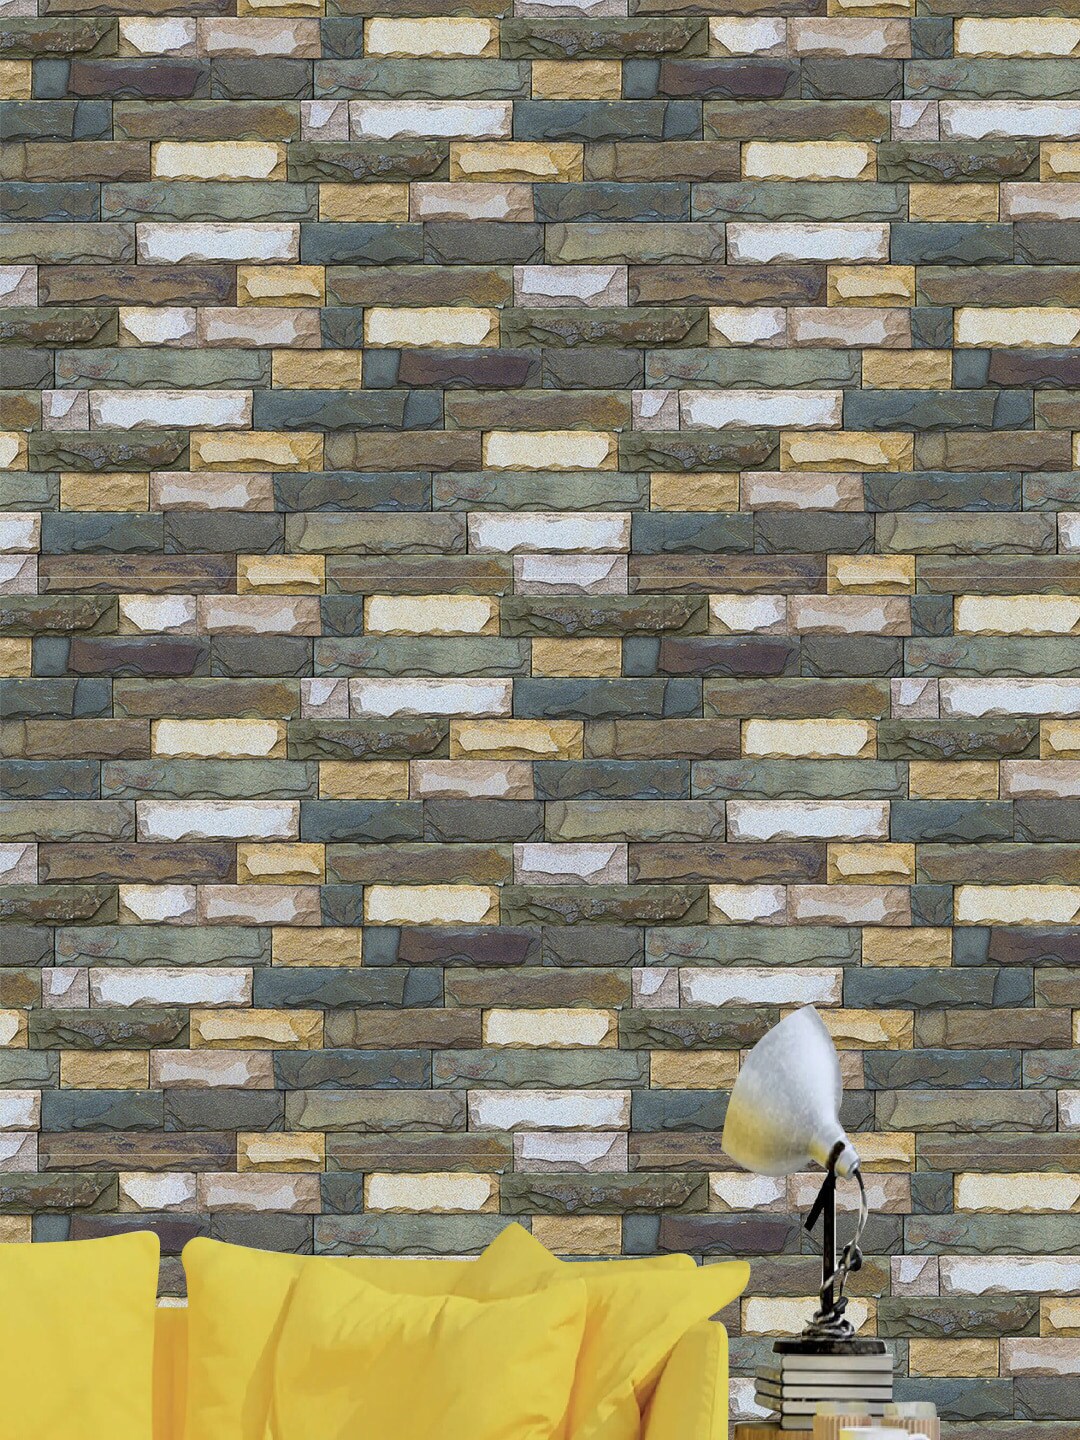 Jaamso Royals Multicoloured 3D Stone Brick Wallpaper Price in India